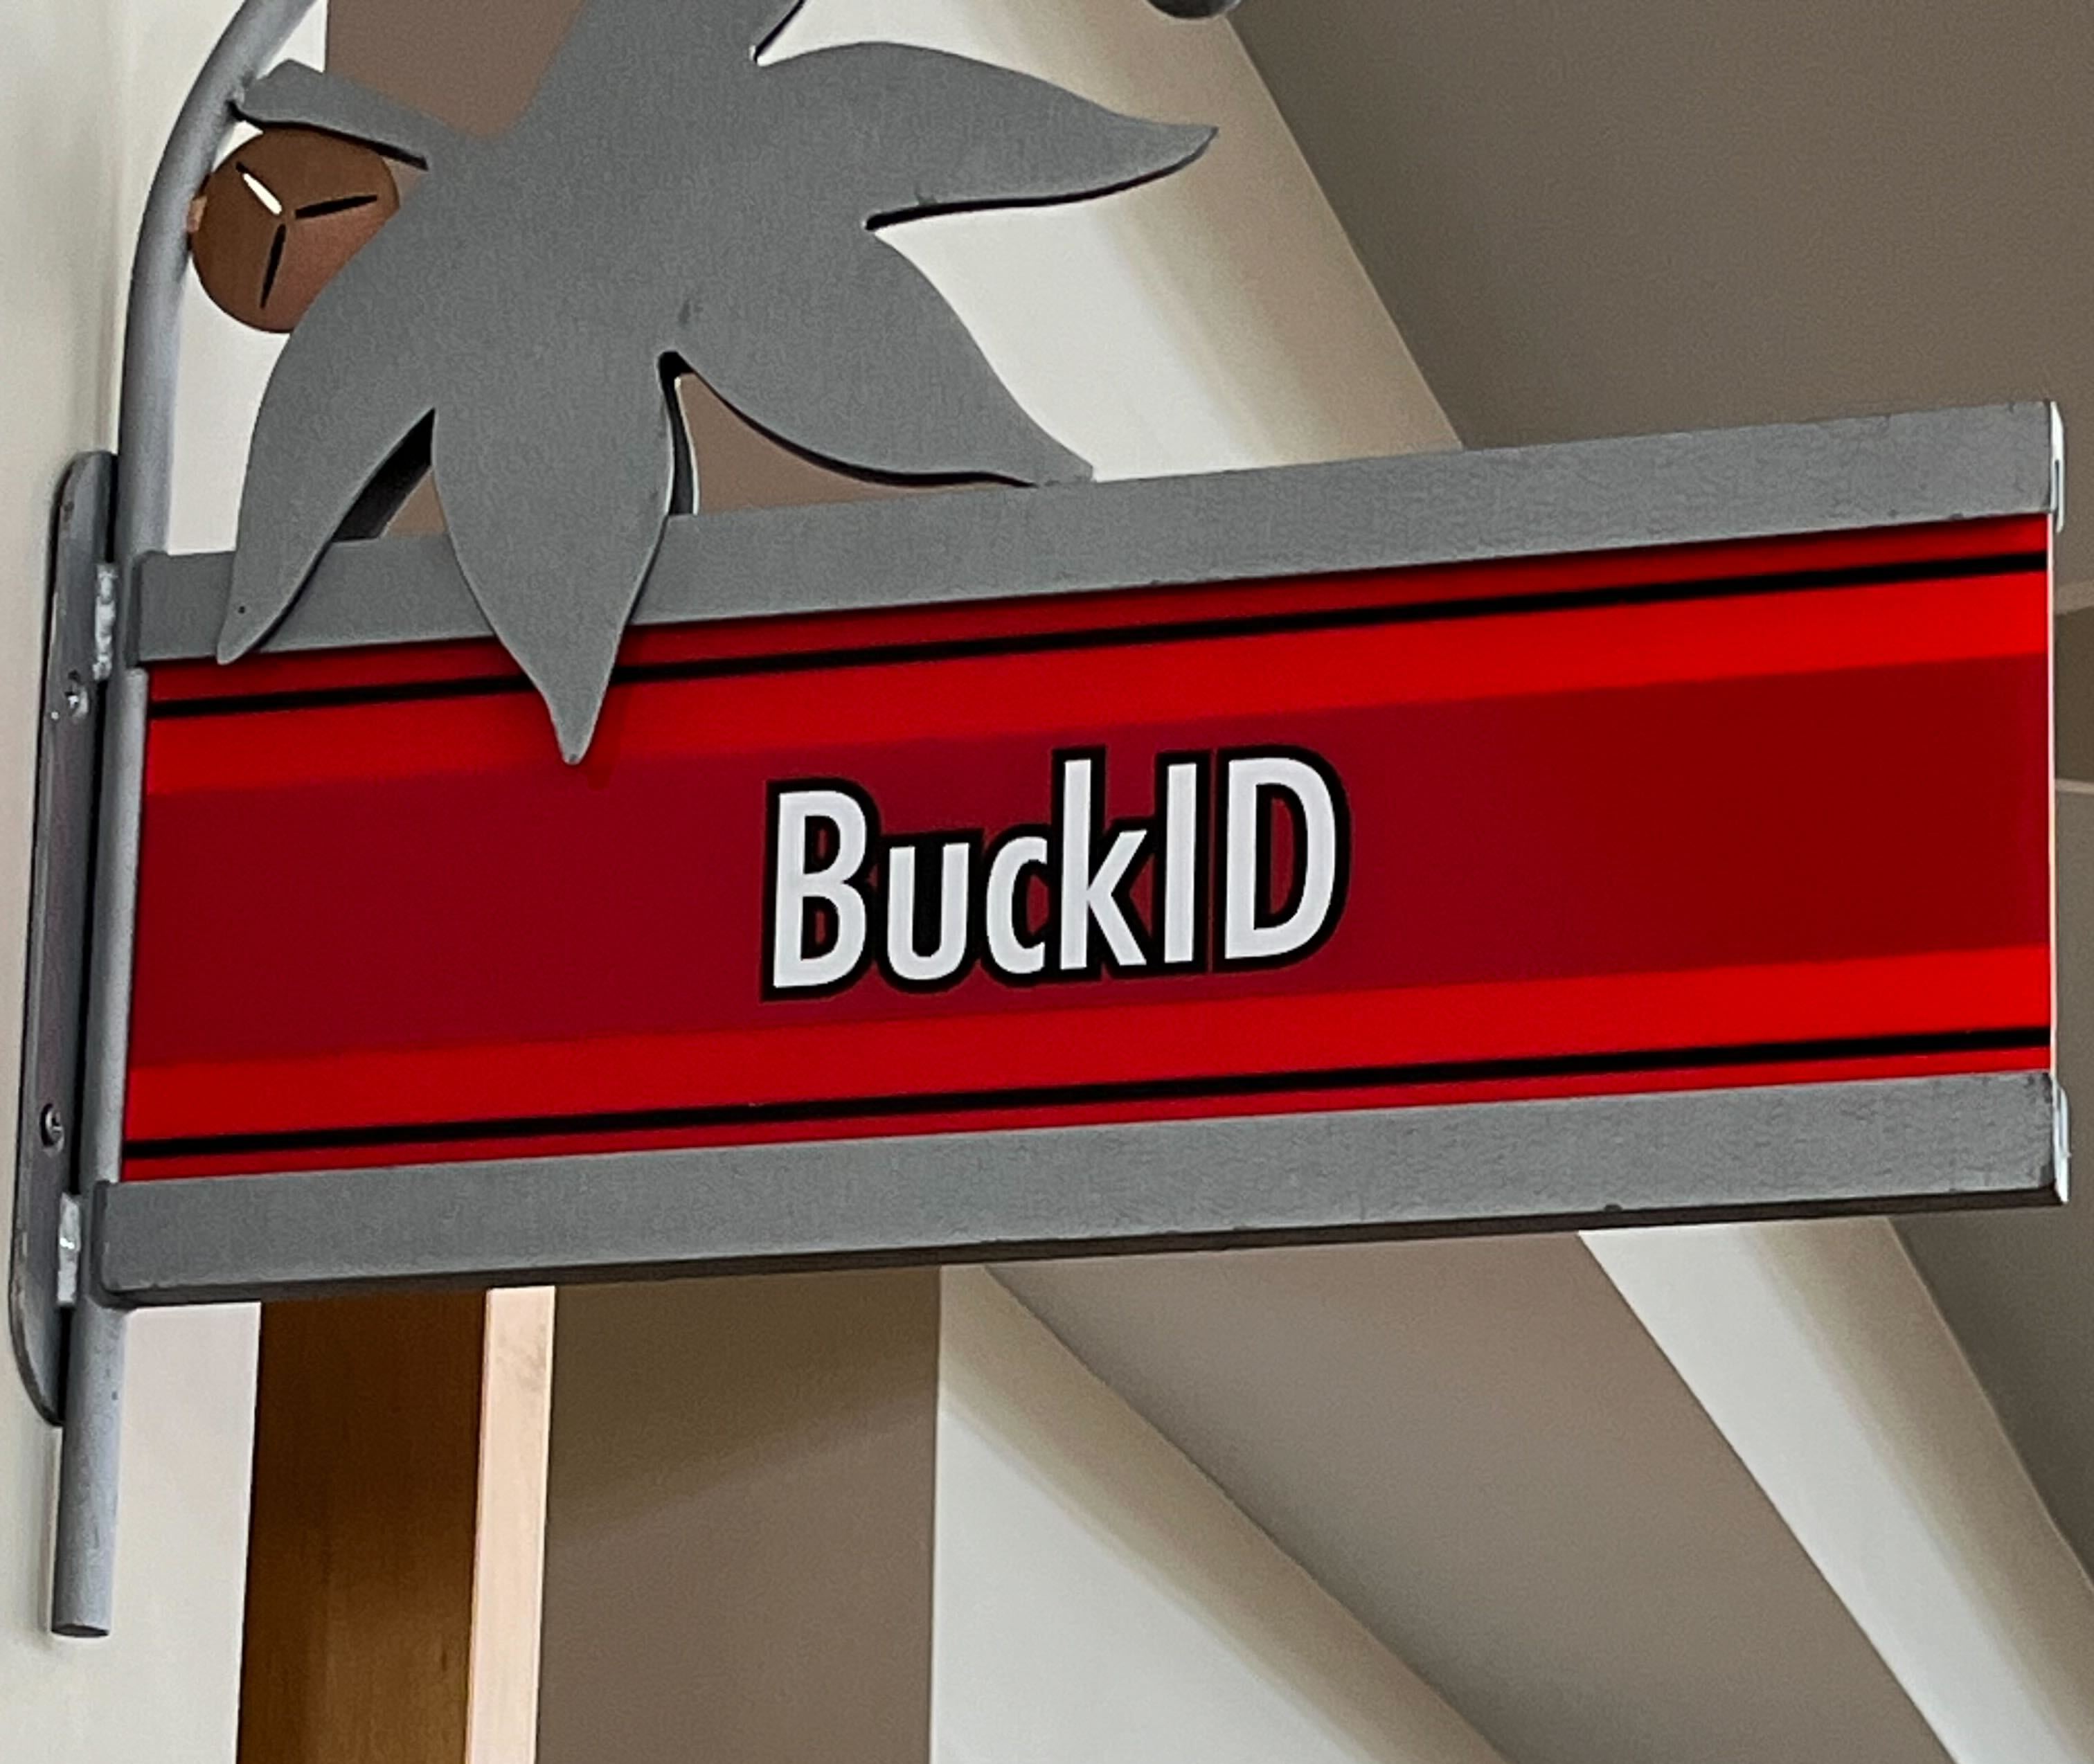 BuckID Office, located on the third floor of the Ohio Union